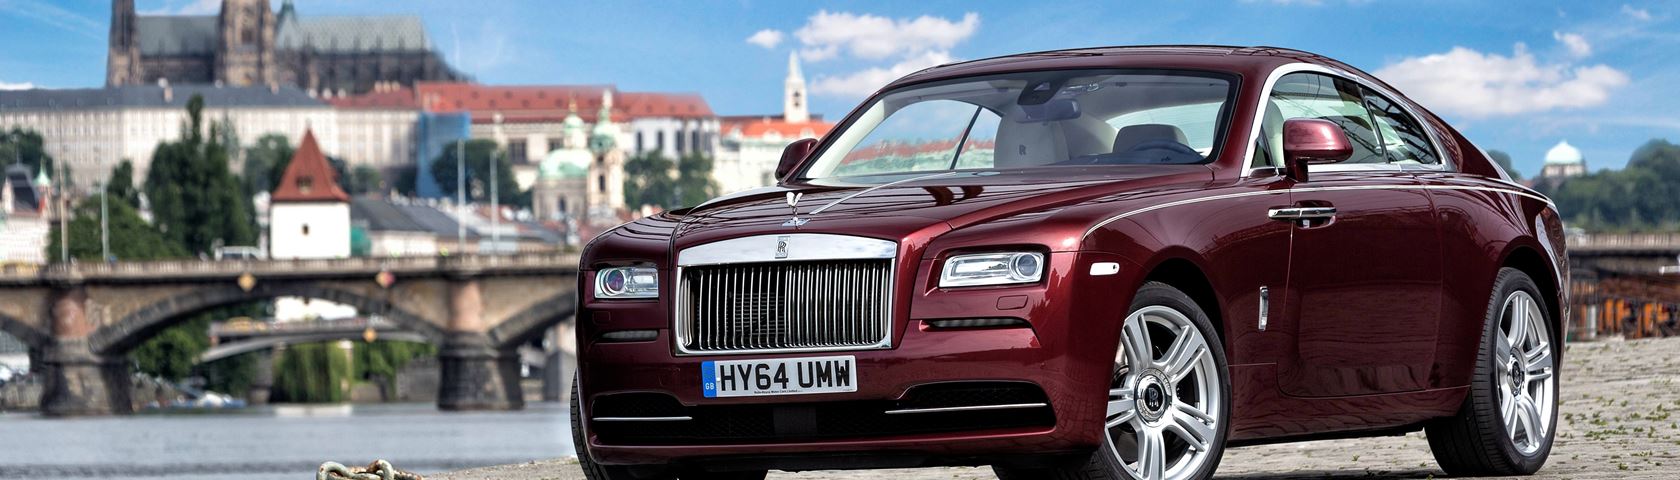 2013 Rolls Royce Wraith - Deshaun Watson Car - HD Wallpaper 